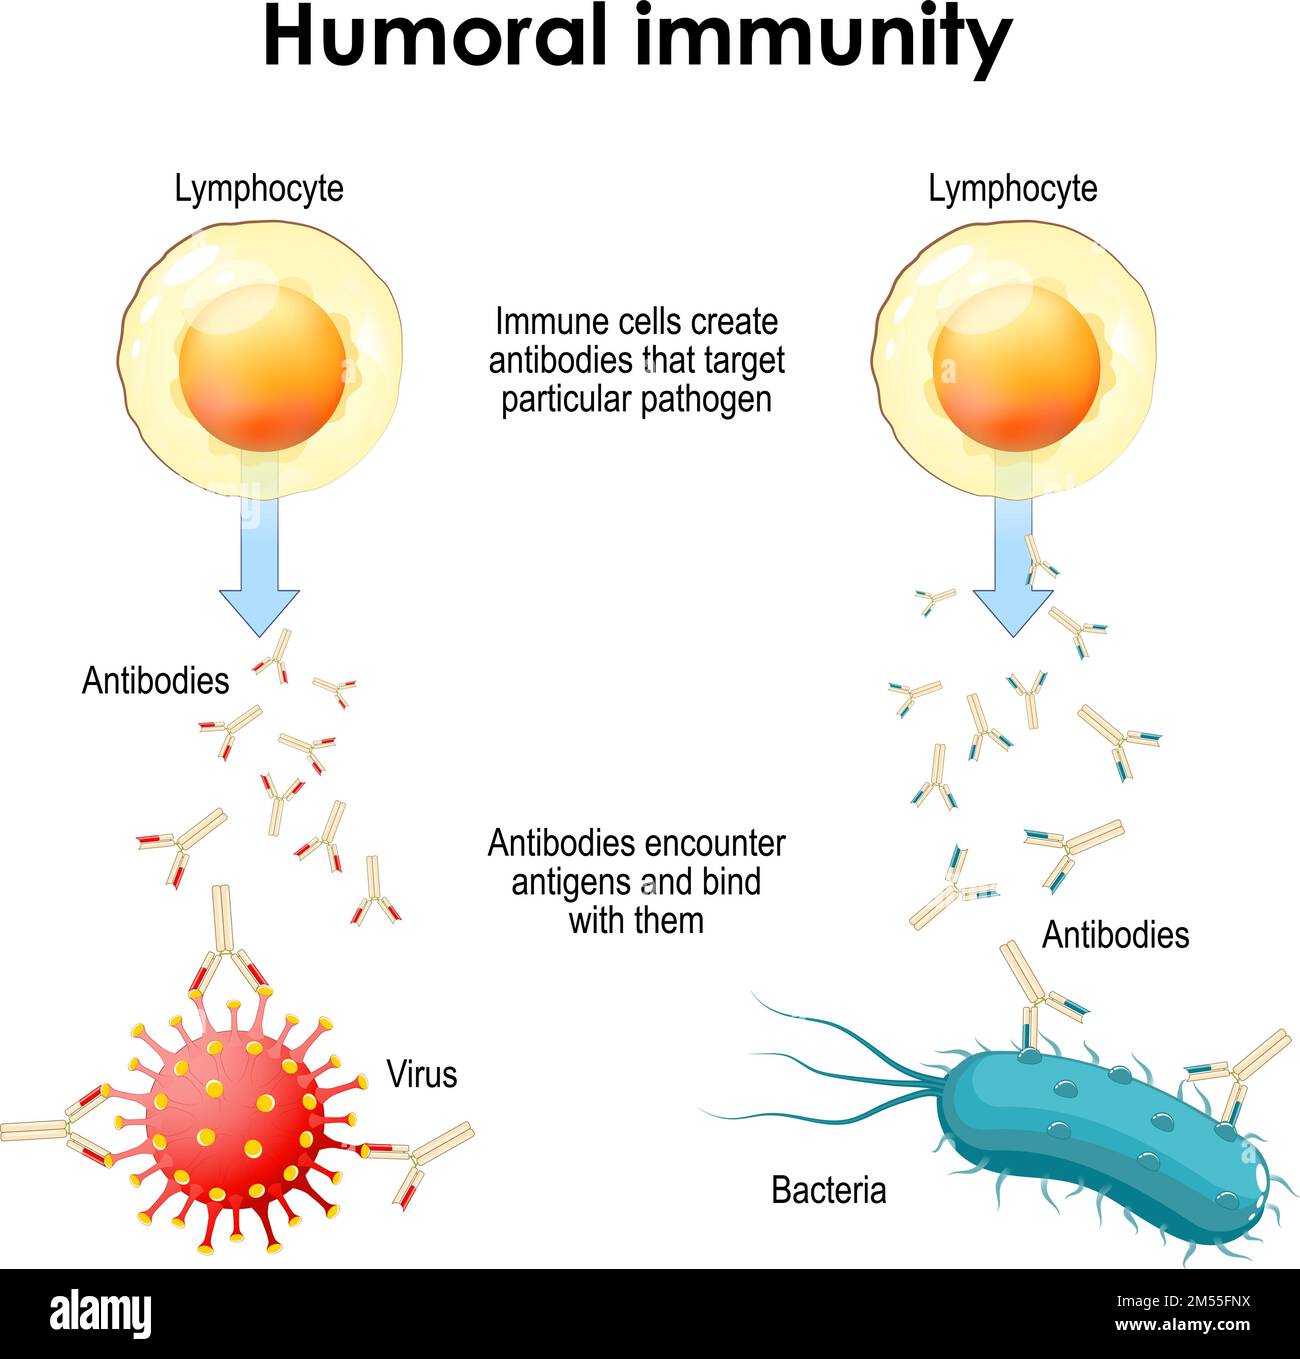 humoral immunity. Bacteria, Virus, Lymphocyte and Antibody. Immune cells create antibodies that target particular pathogen Stock Vector